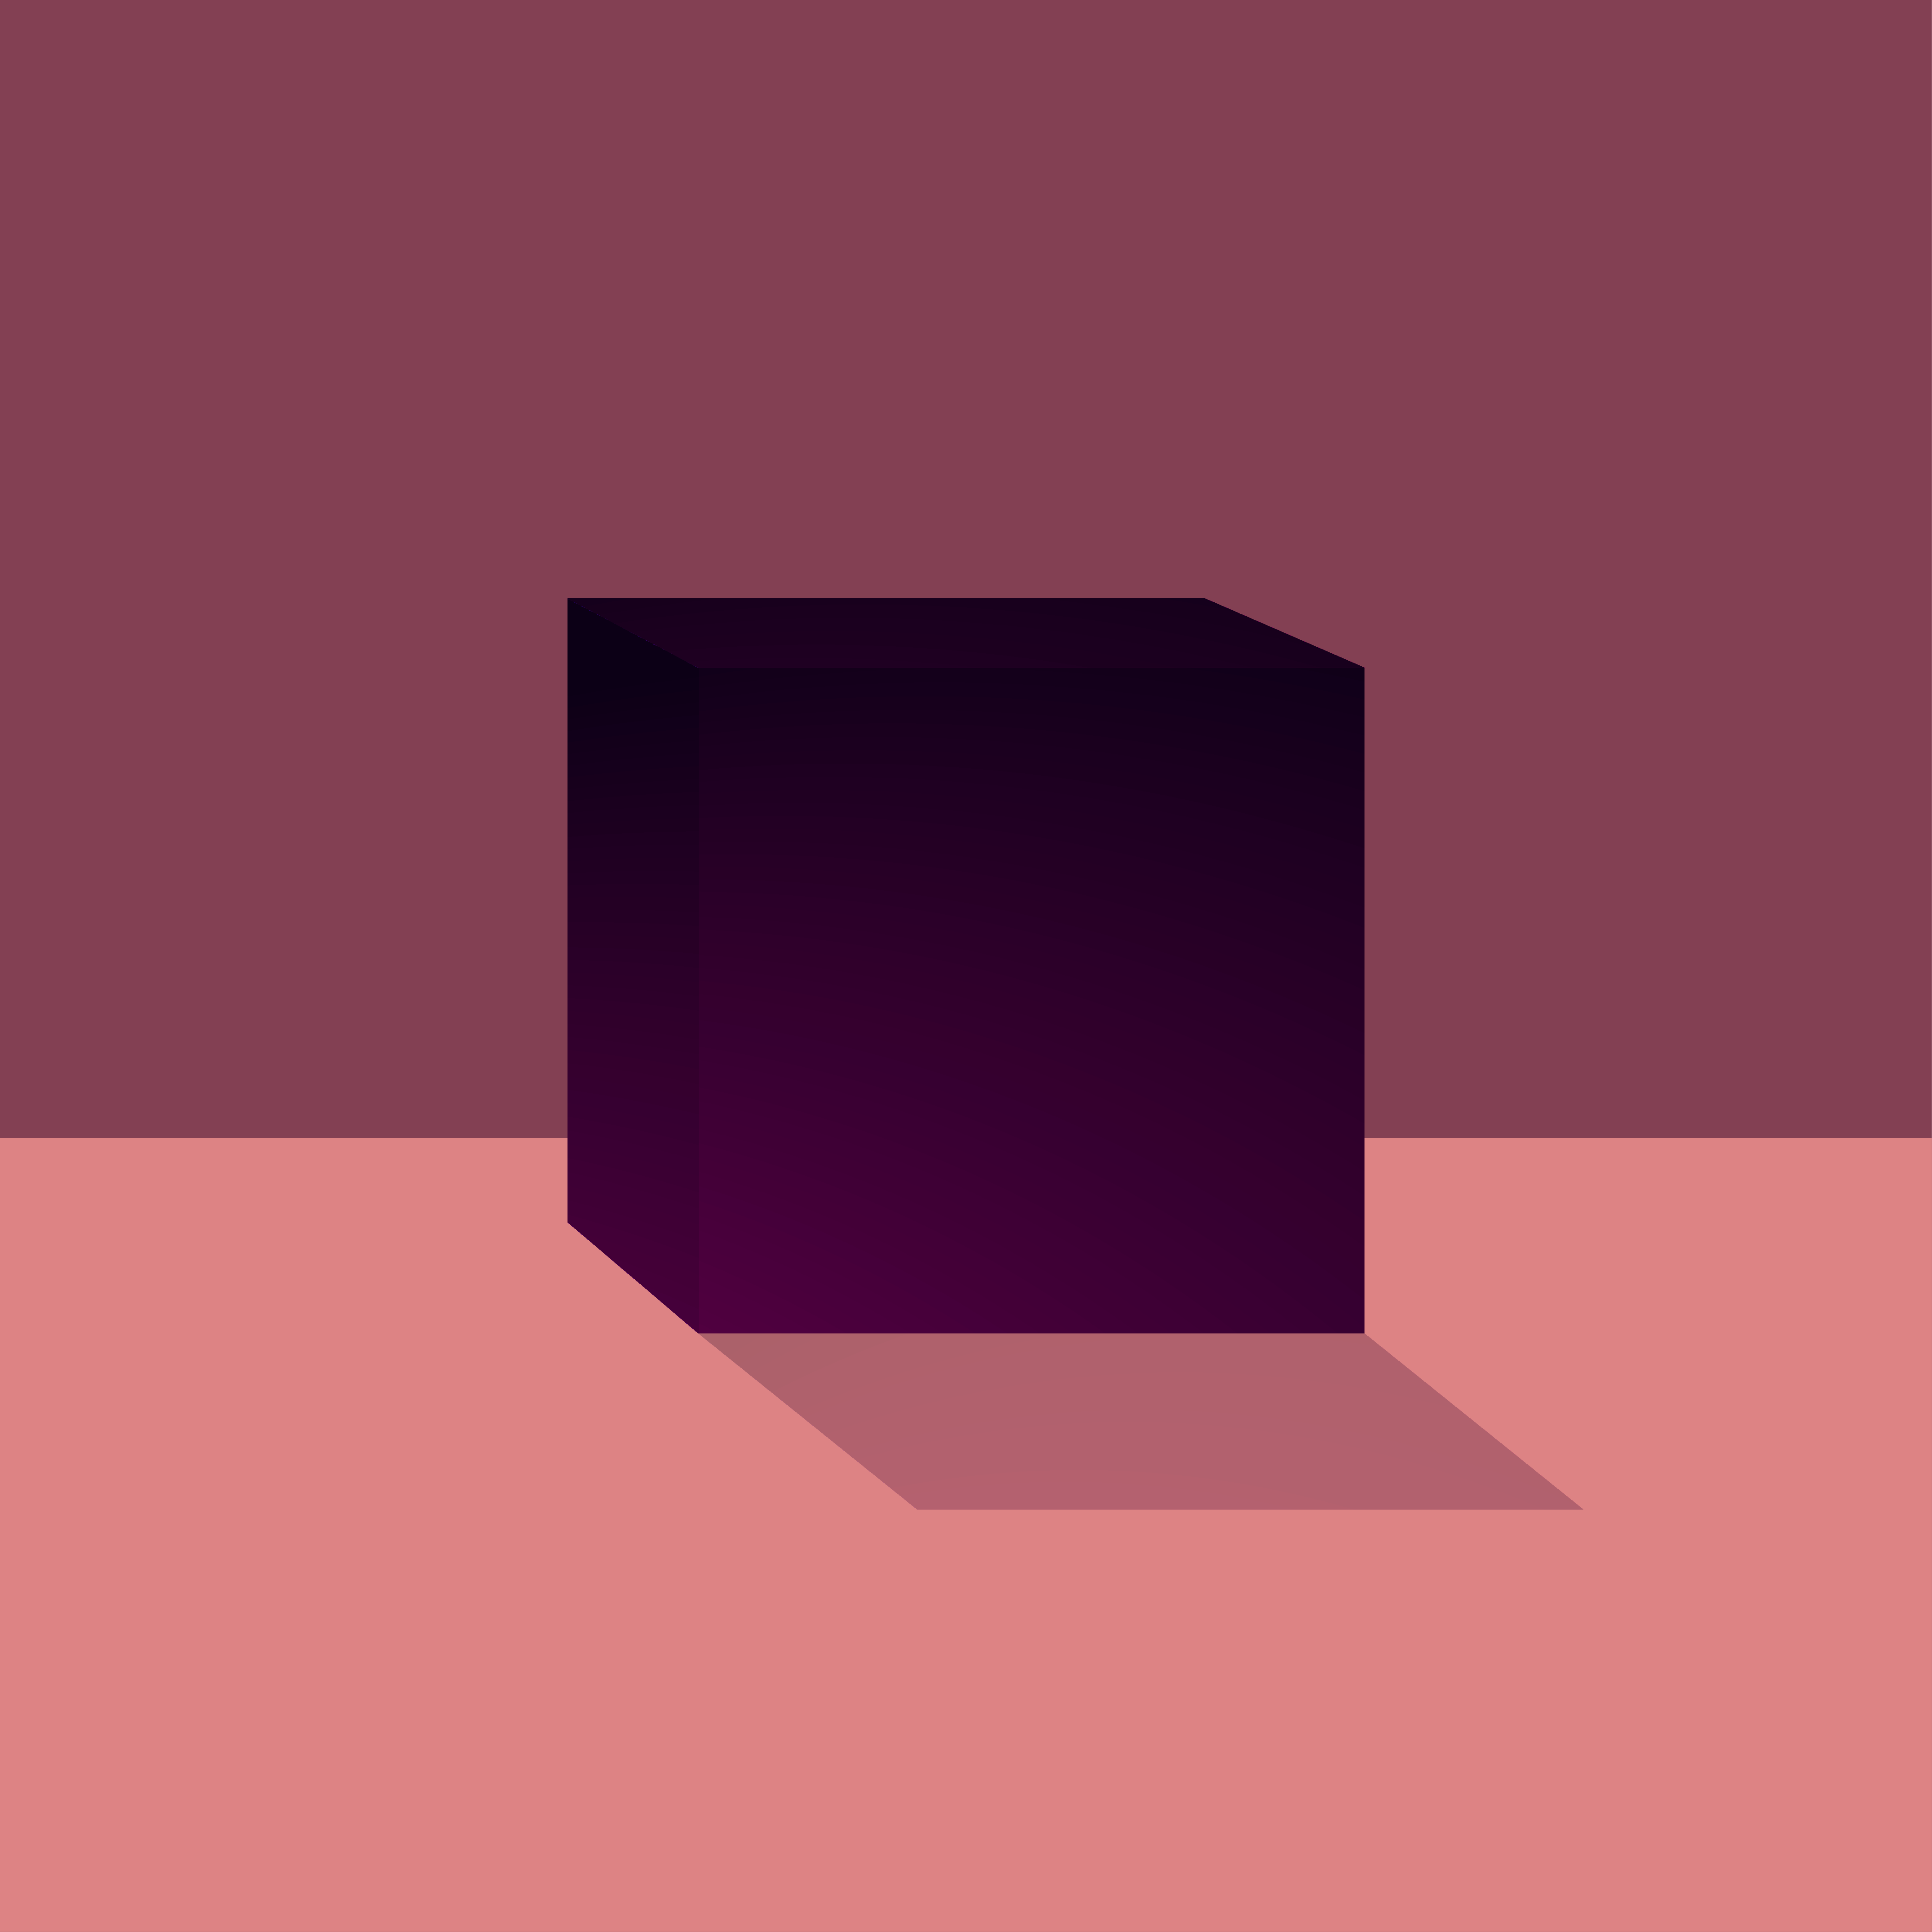 Cube #32